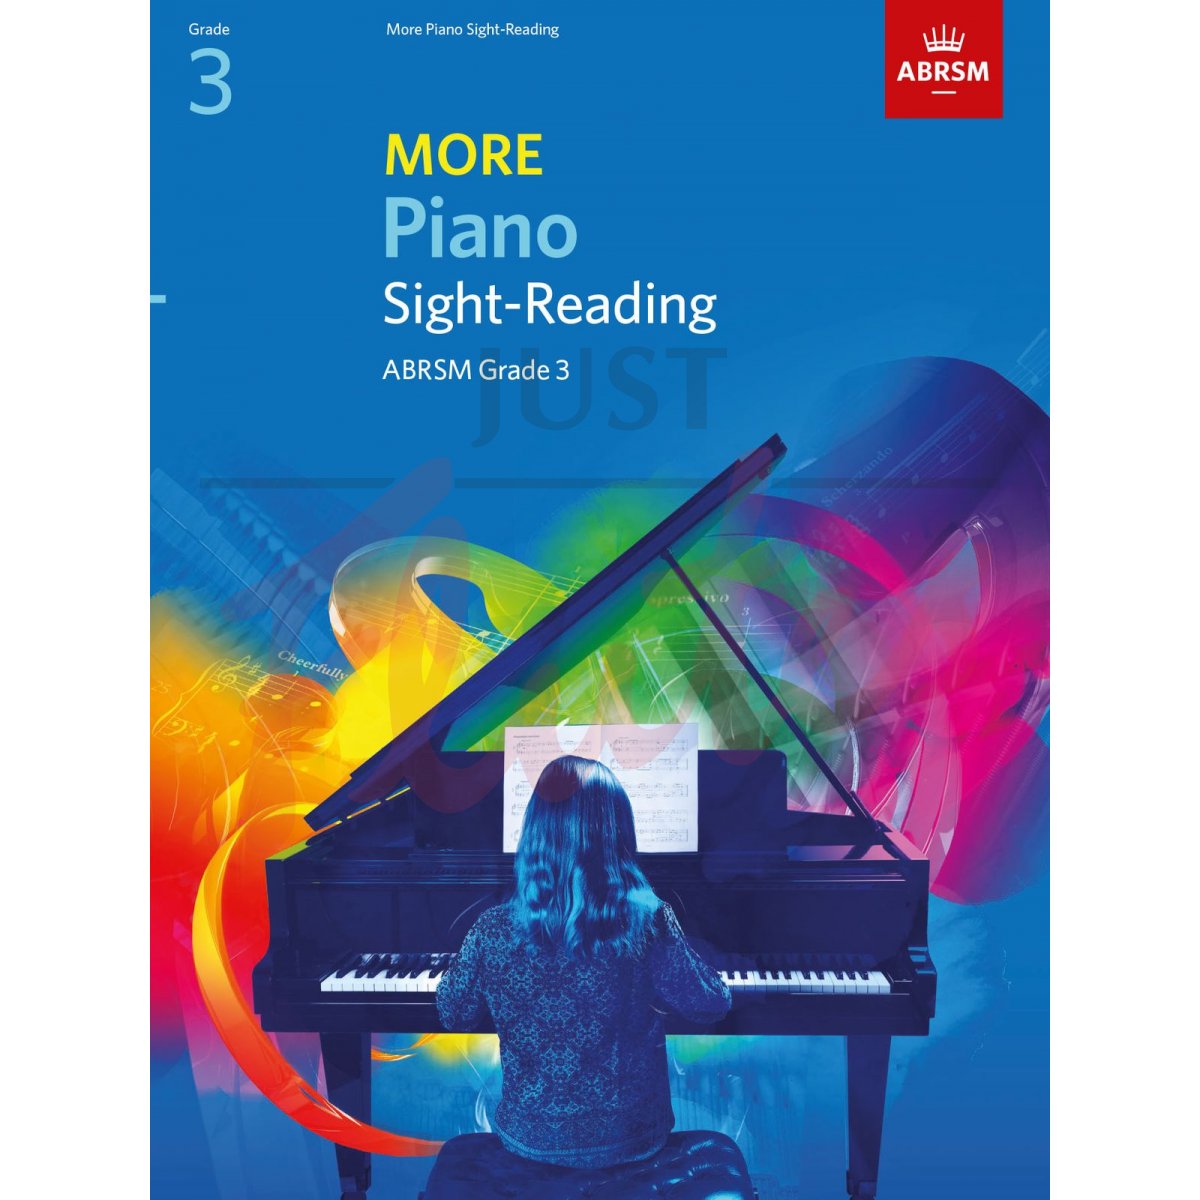 More Piano Sight-Reading Grade 3